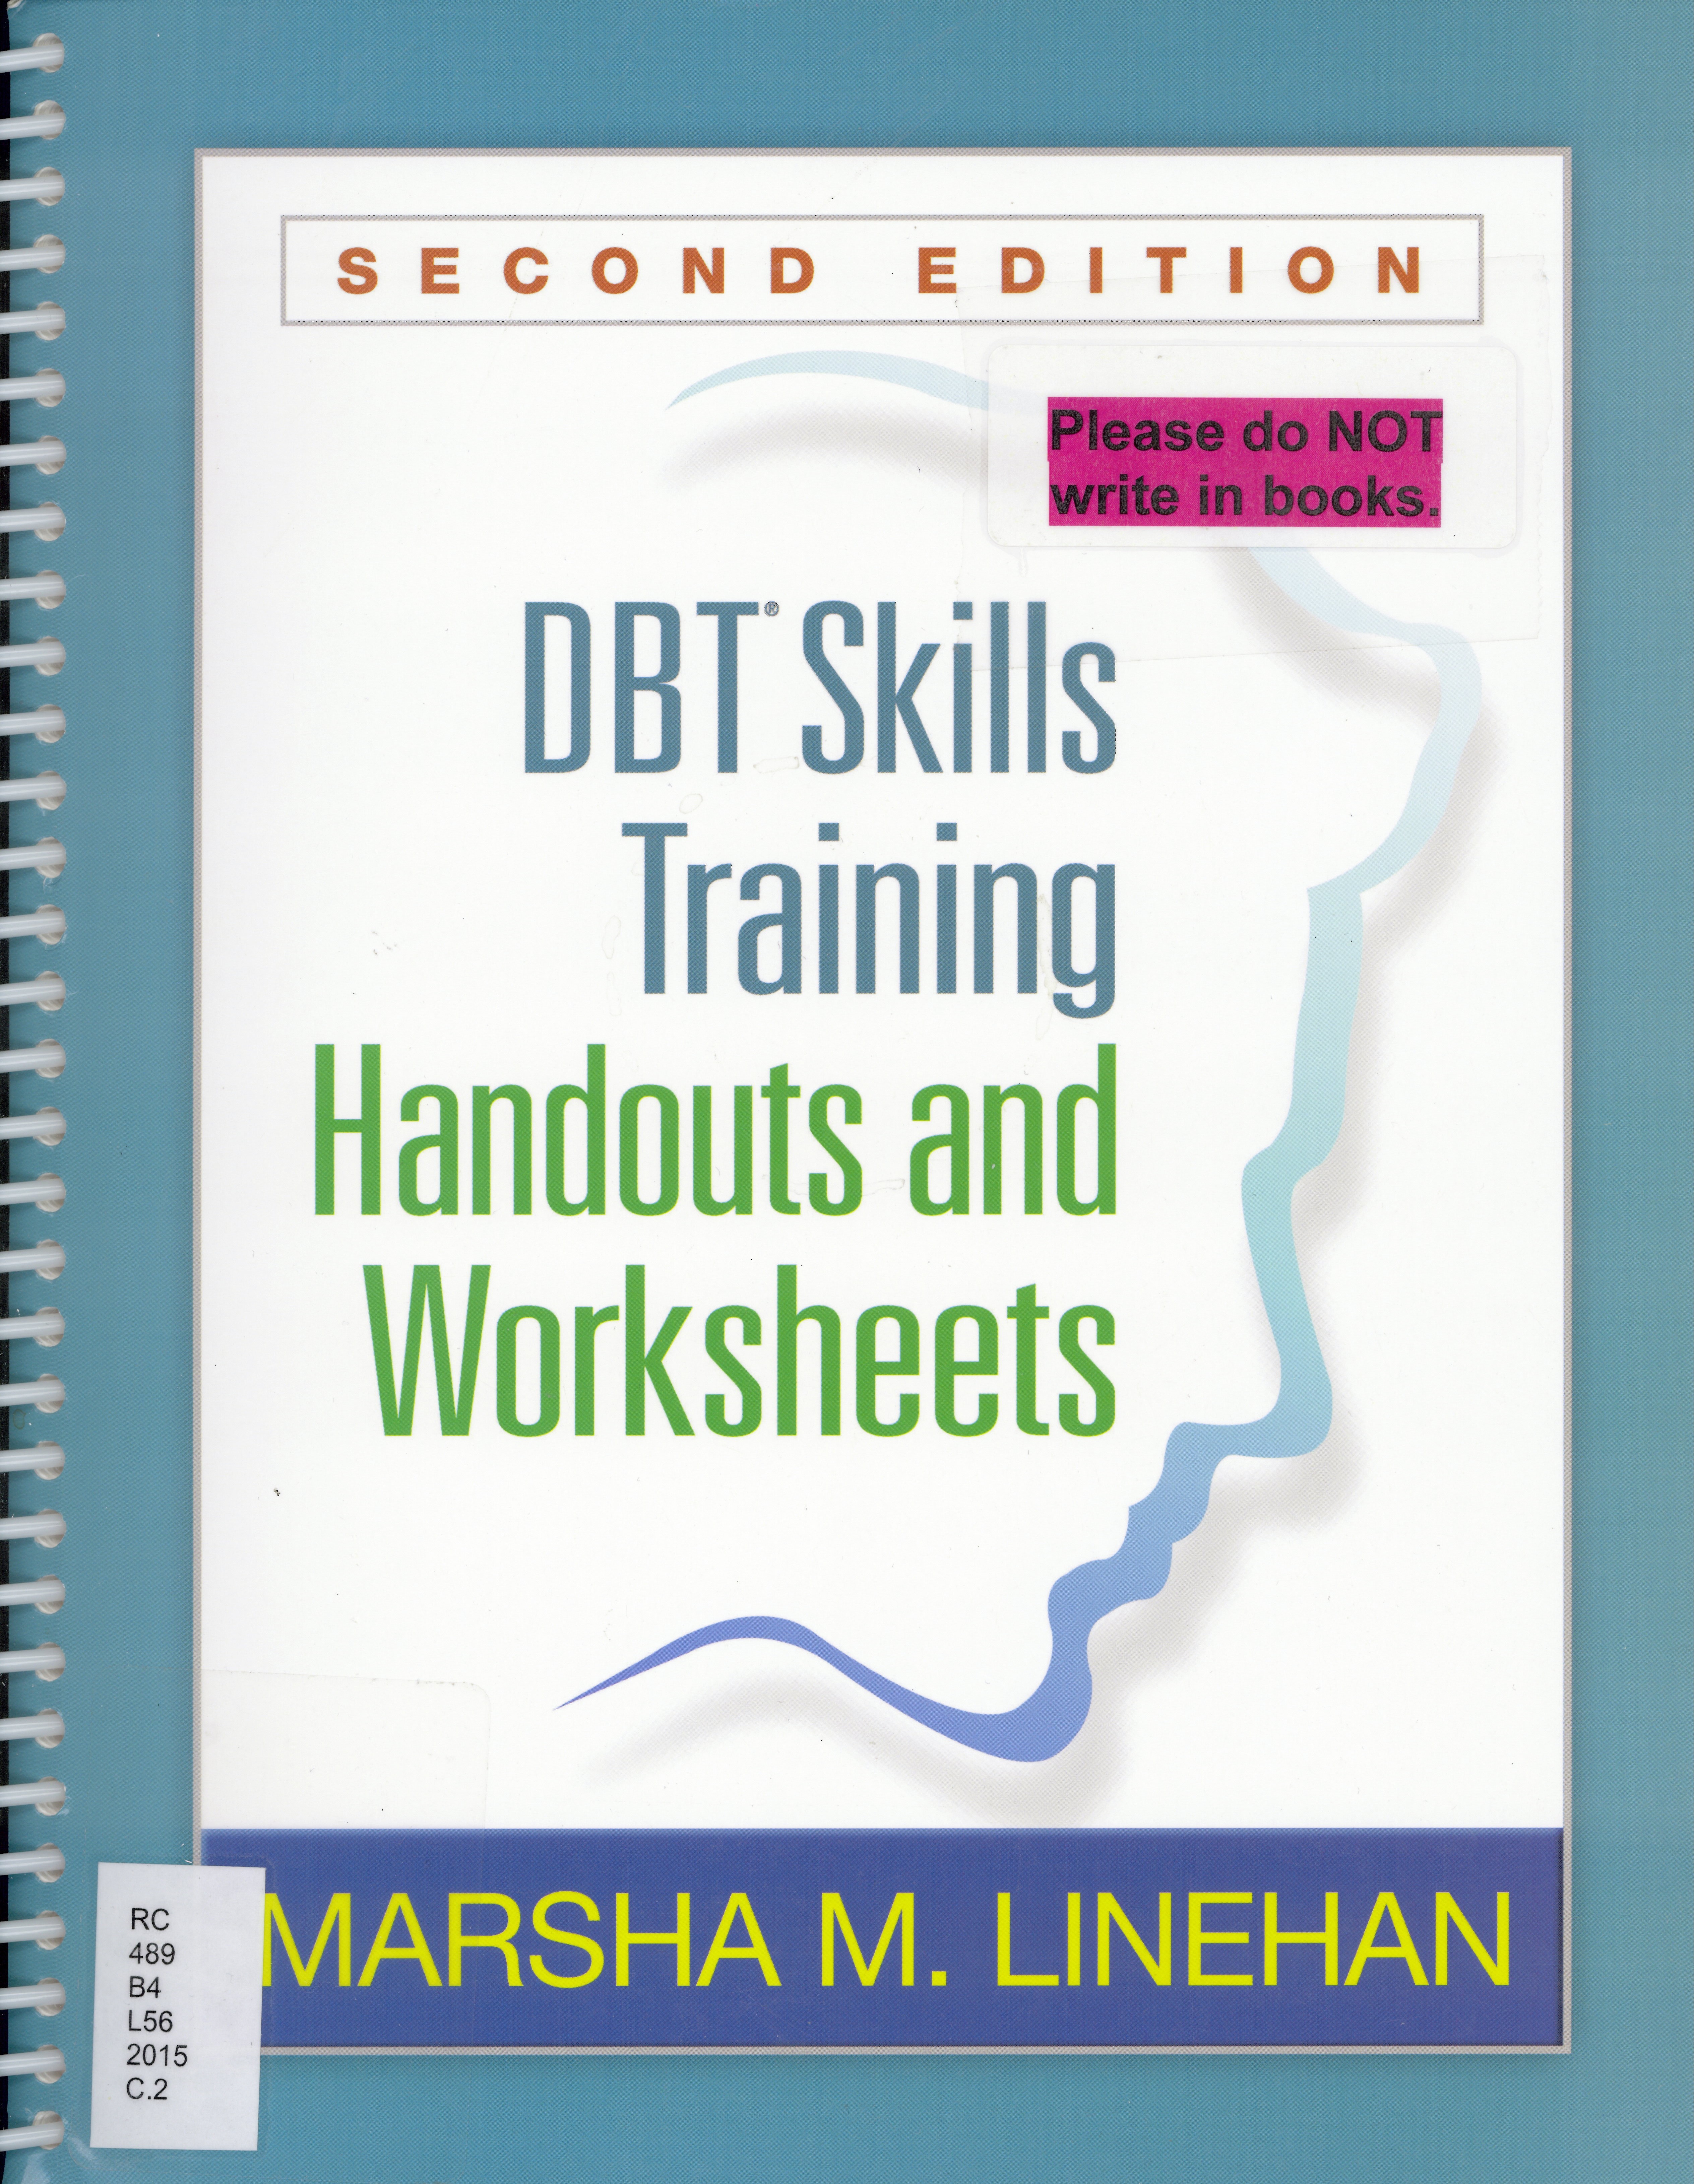 DBT skills training handouts and worksheets